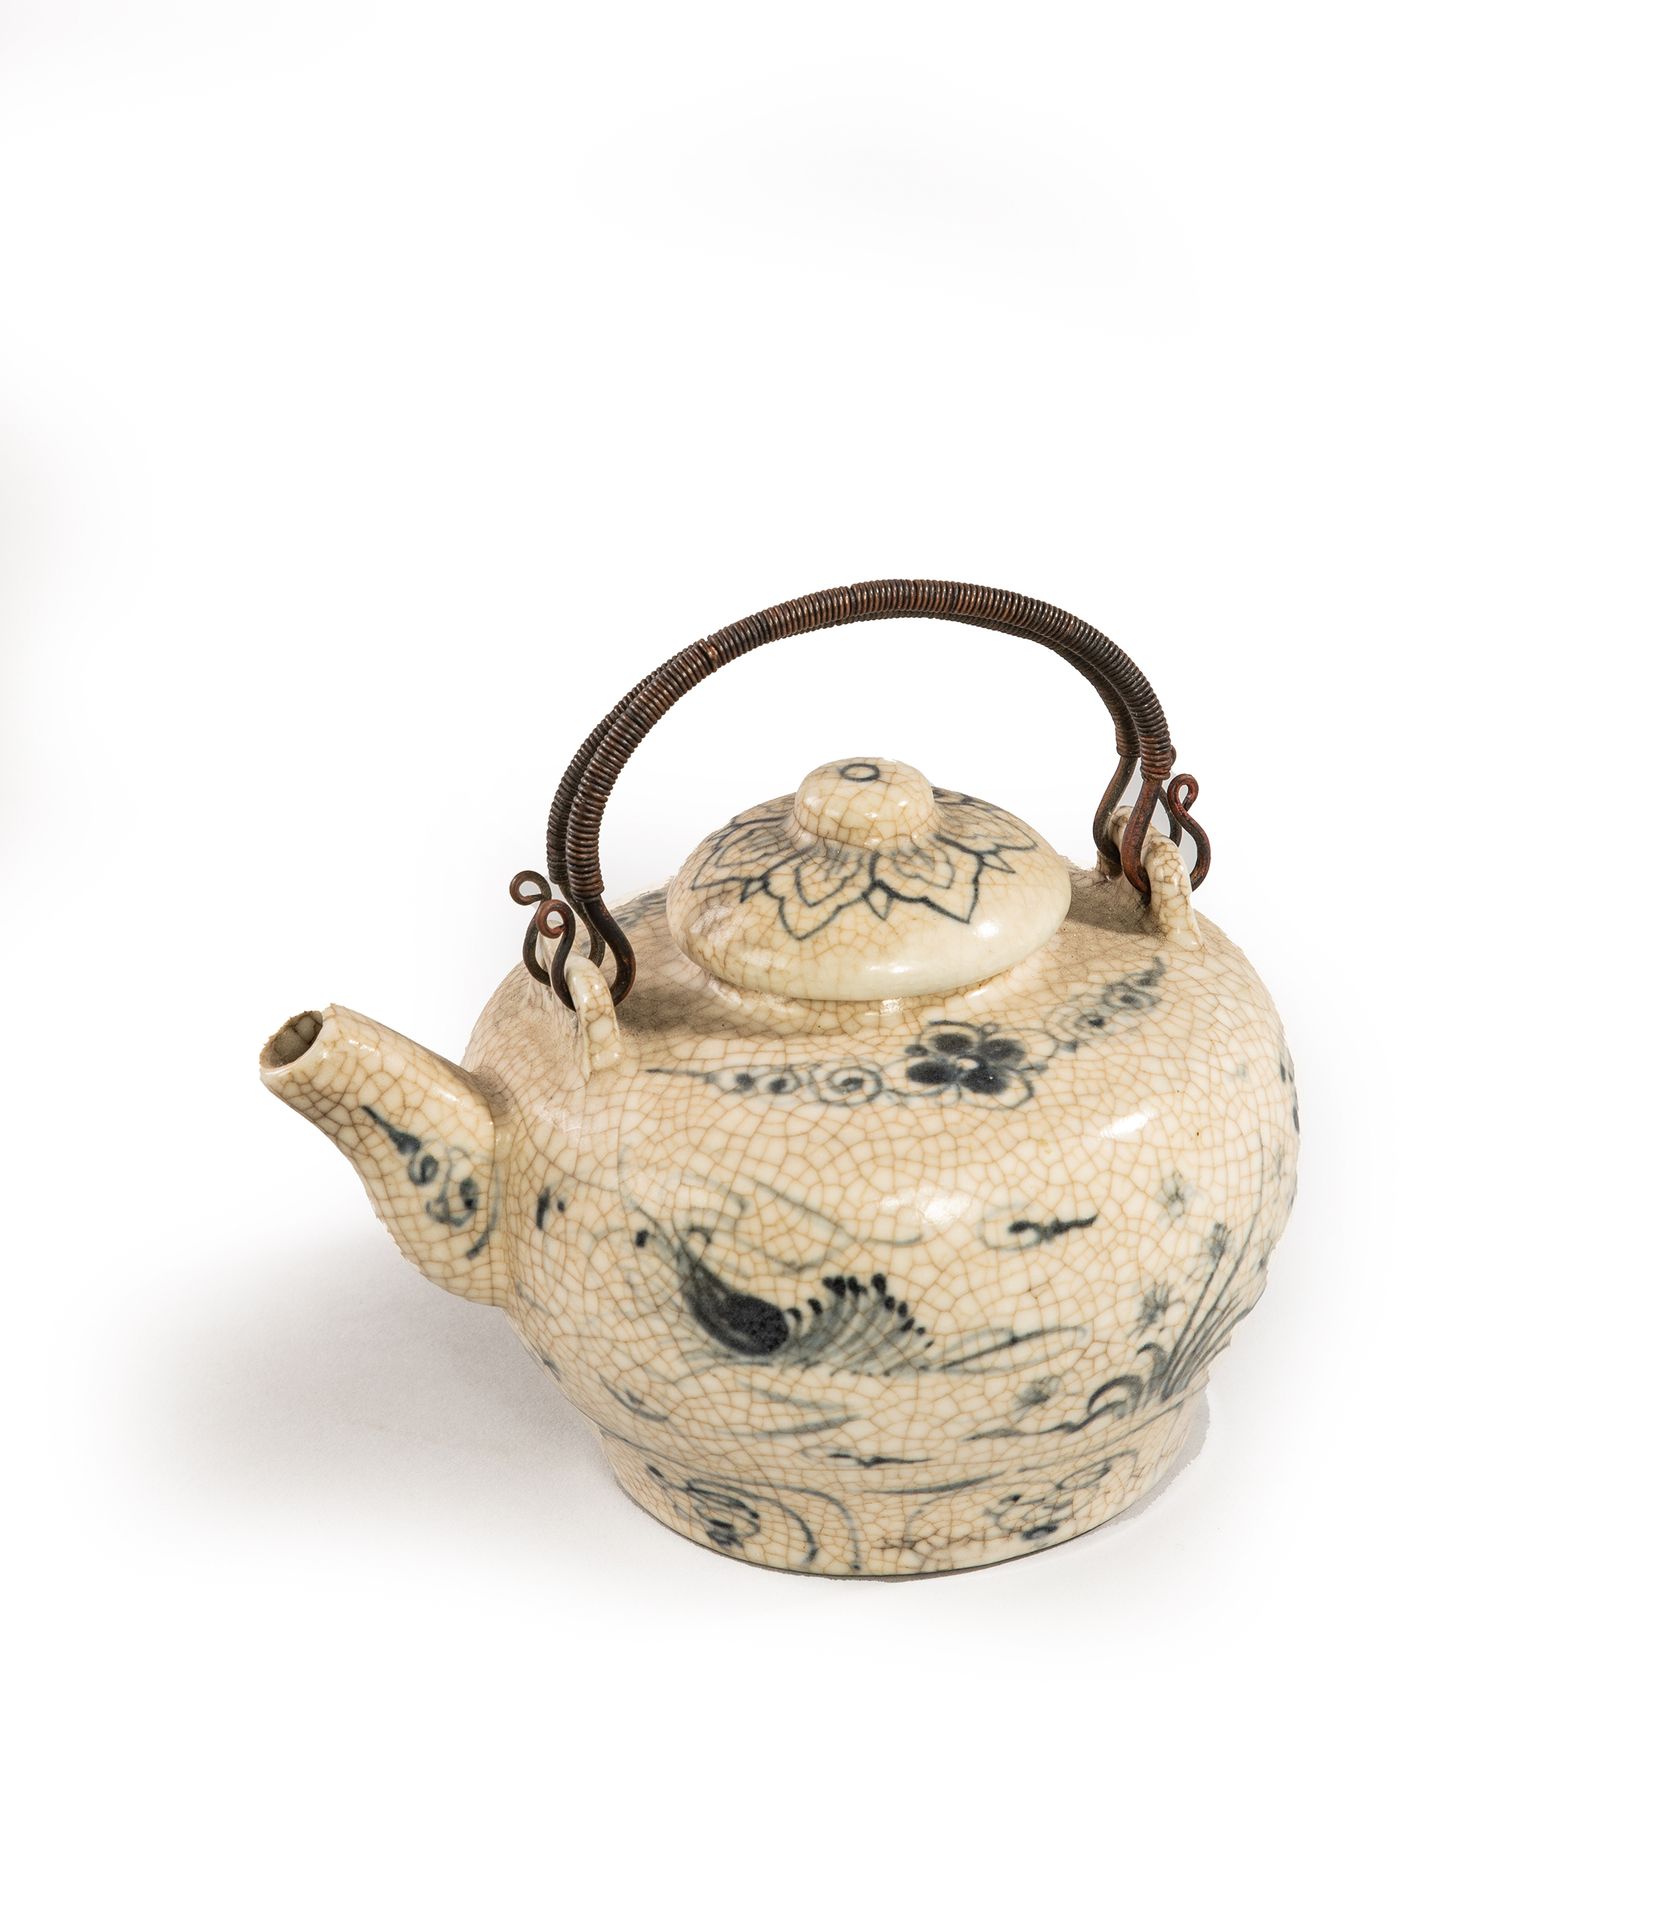 Null 
青白瓷茶壶。

20世纪初的越南

高9厘米，宽11厘米